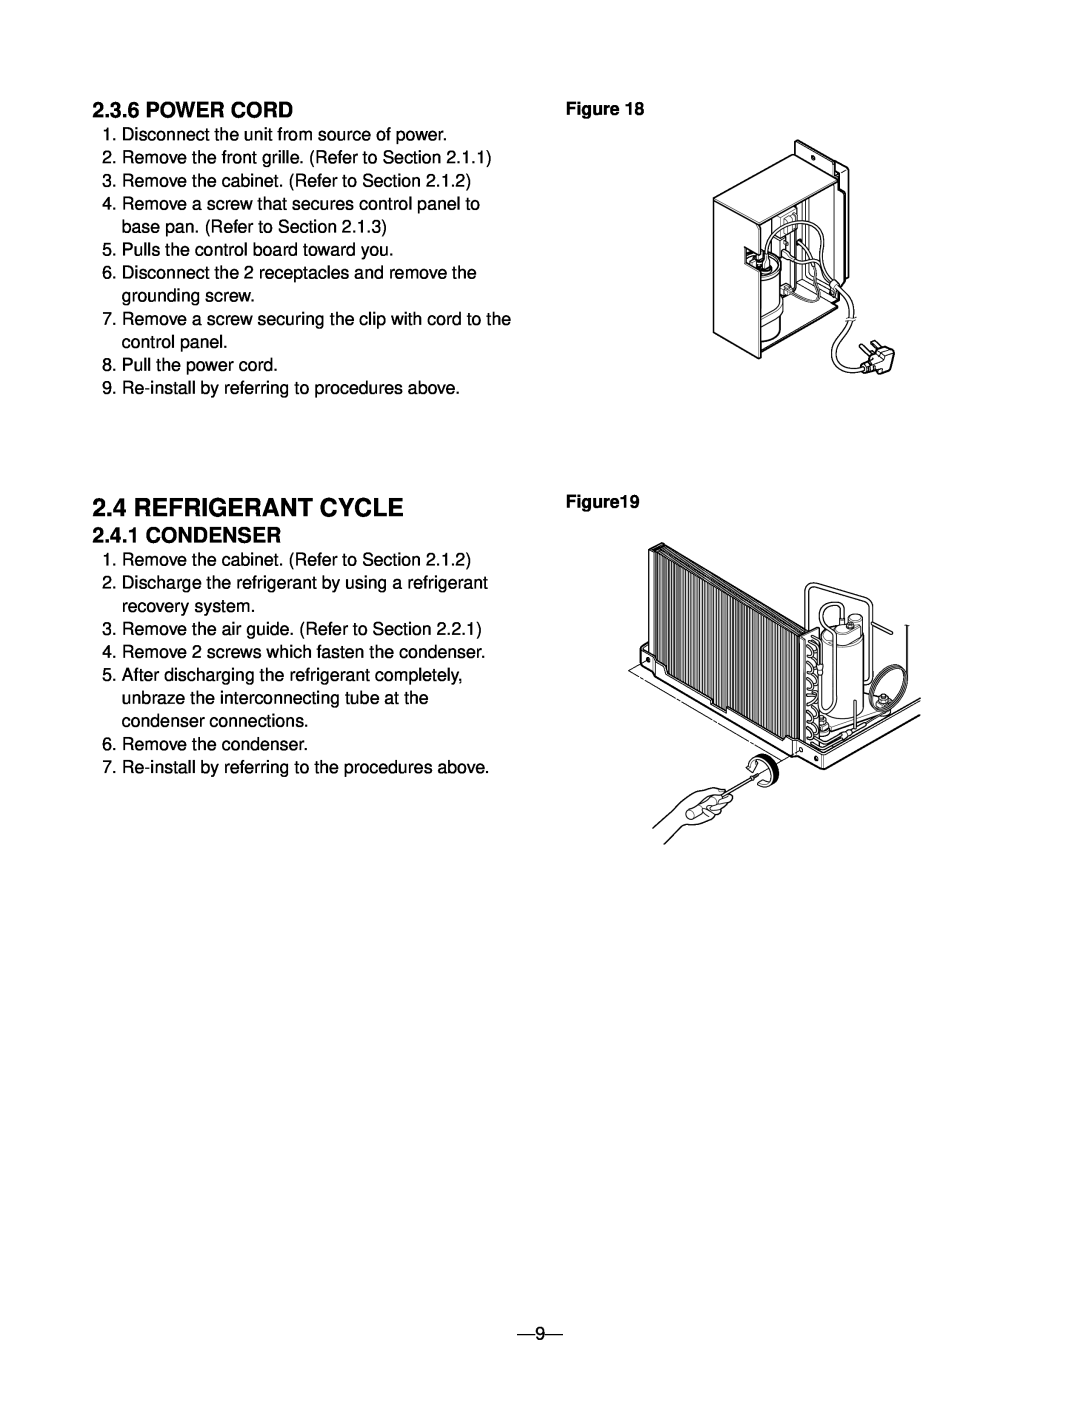 Friedrich CP05C10 manual Refrigerant Cycle, Power Cord, Condenser 